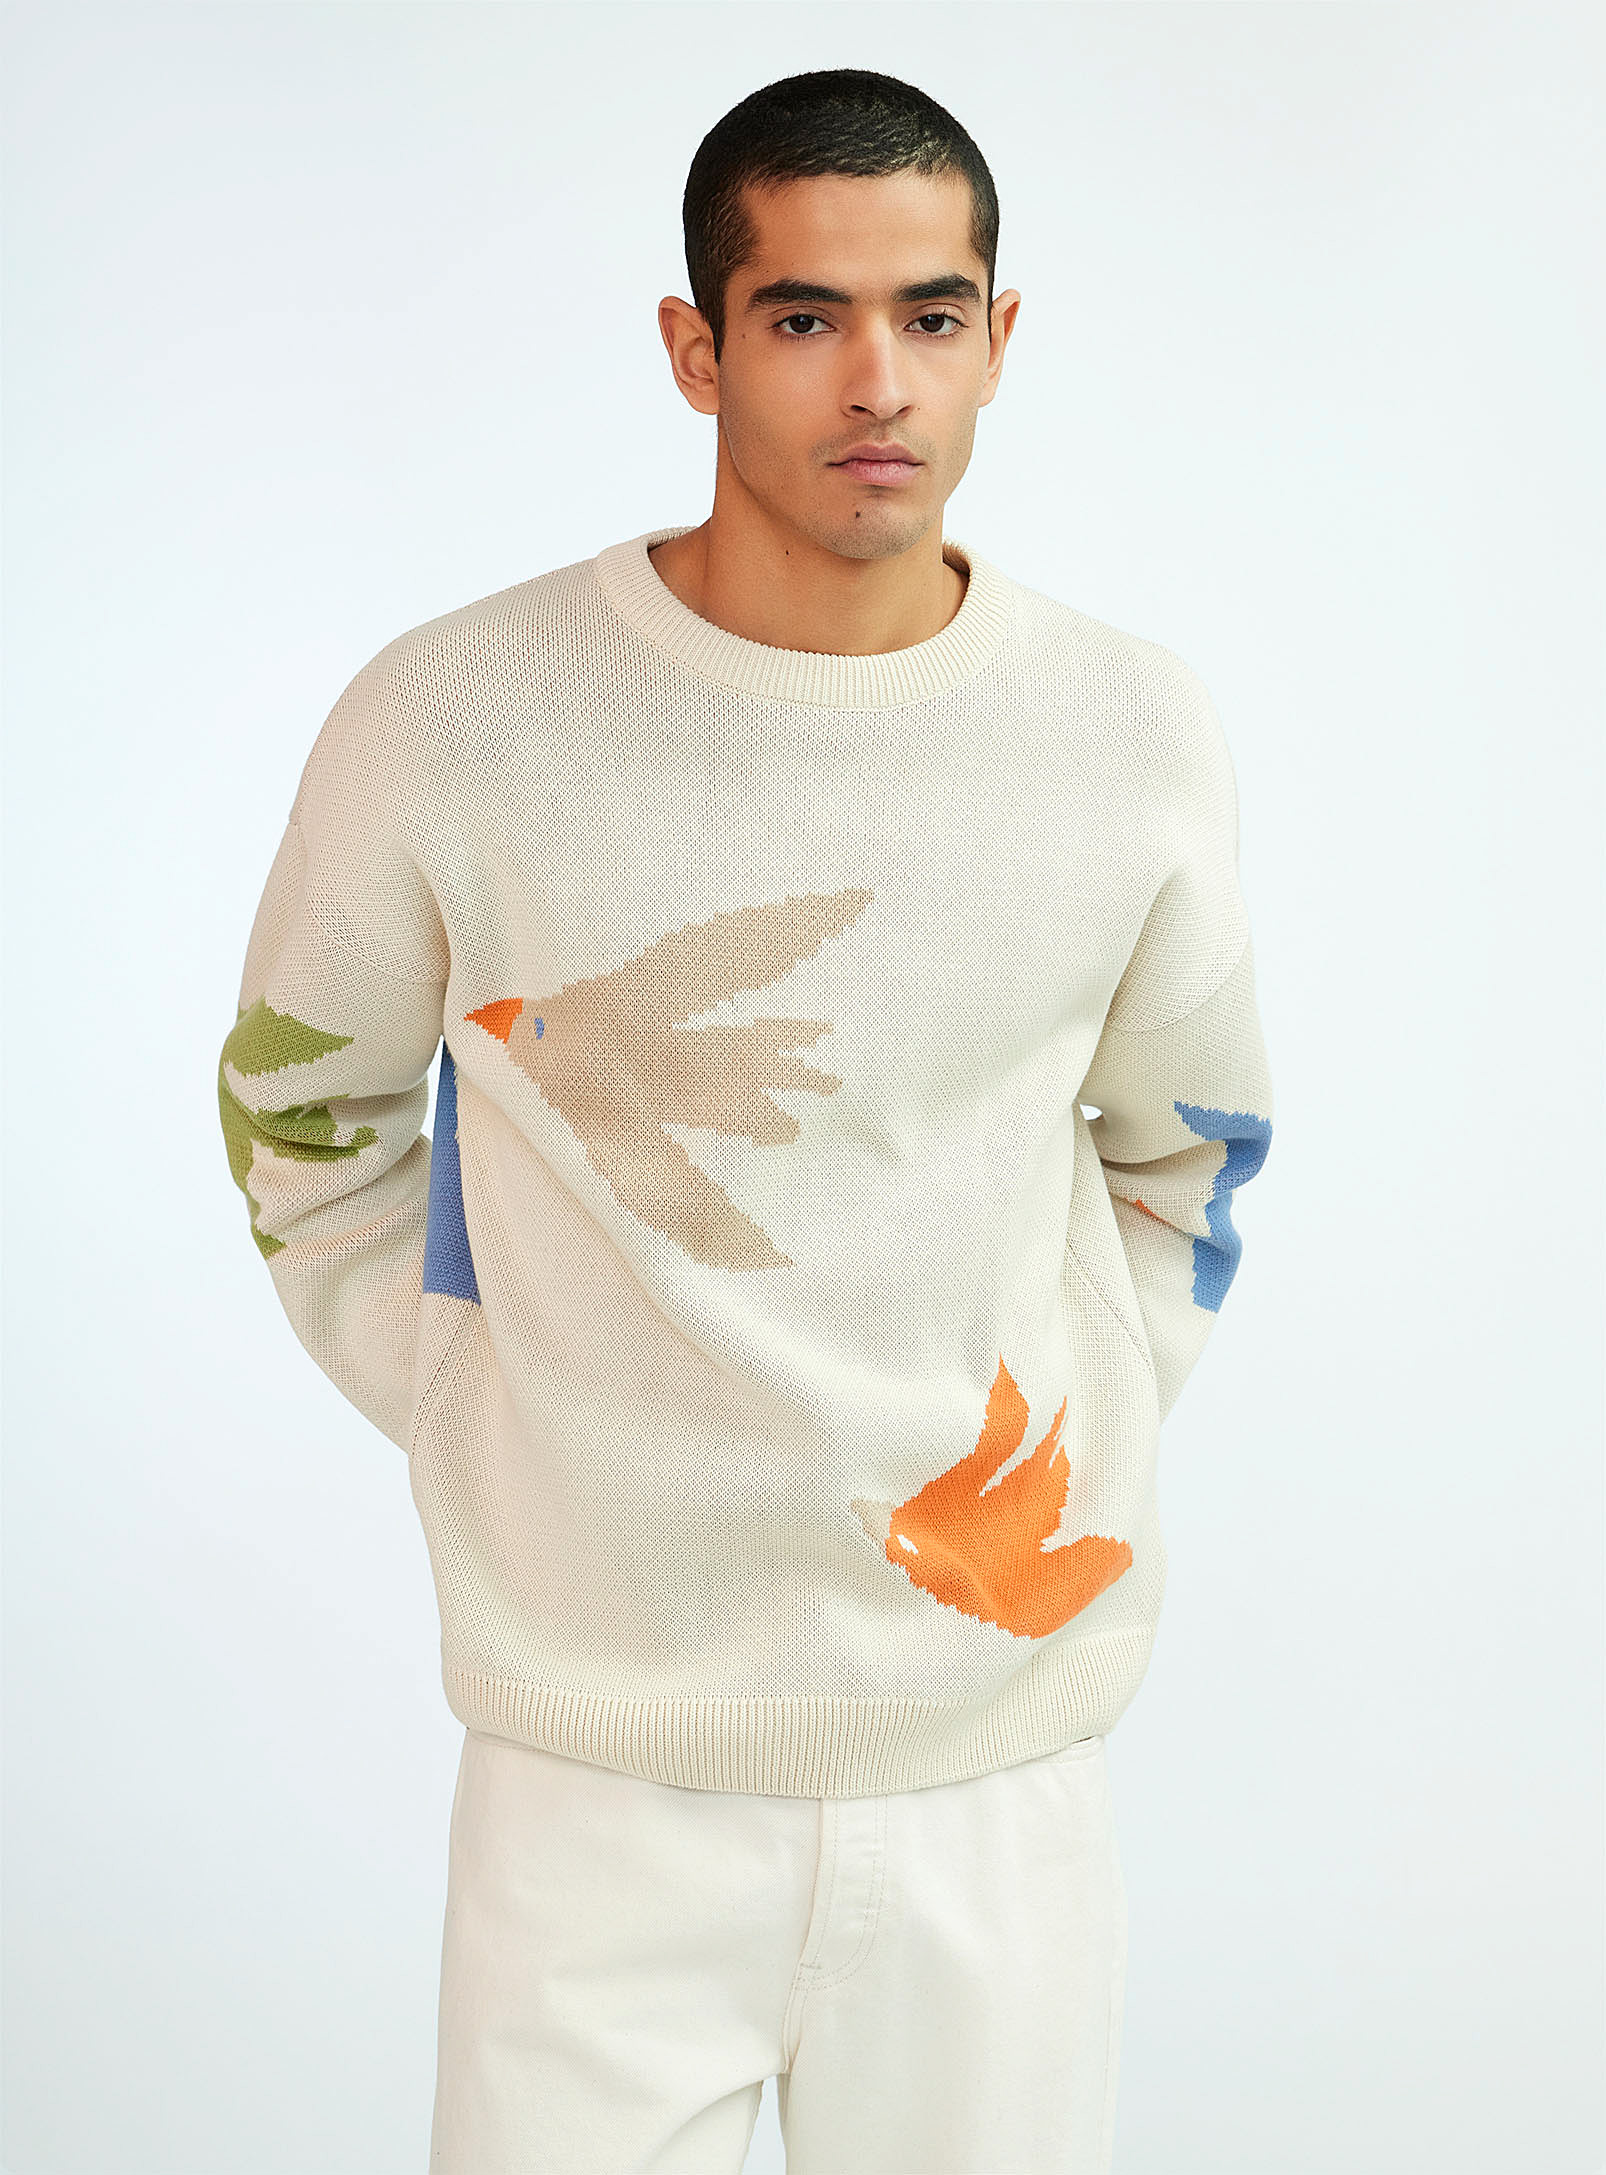 Olow - Men's Migration jacquard sweater